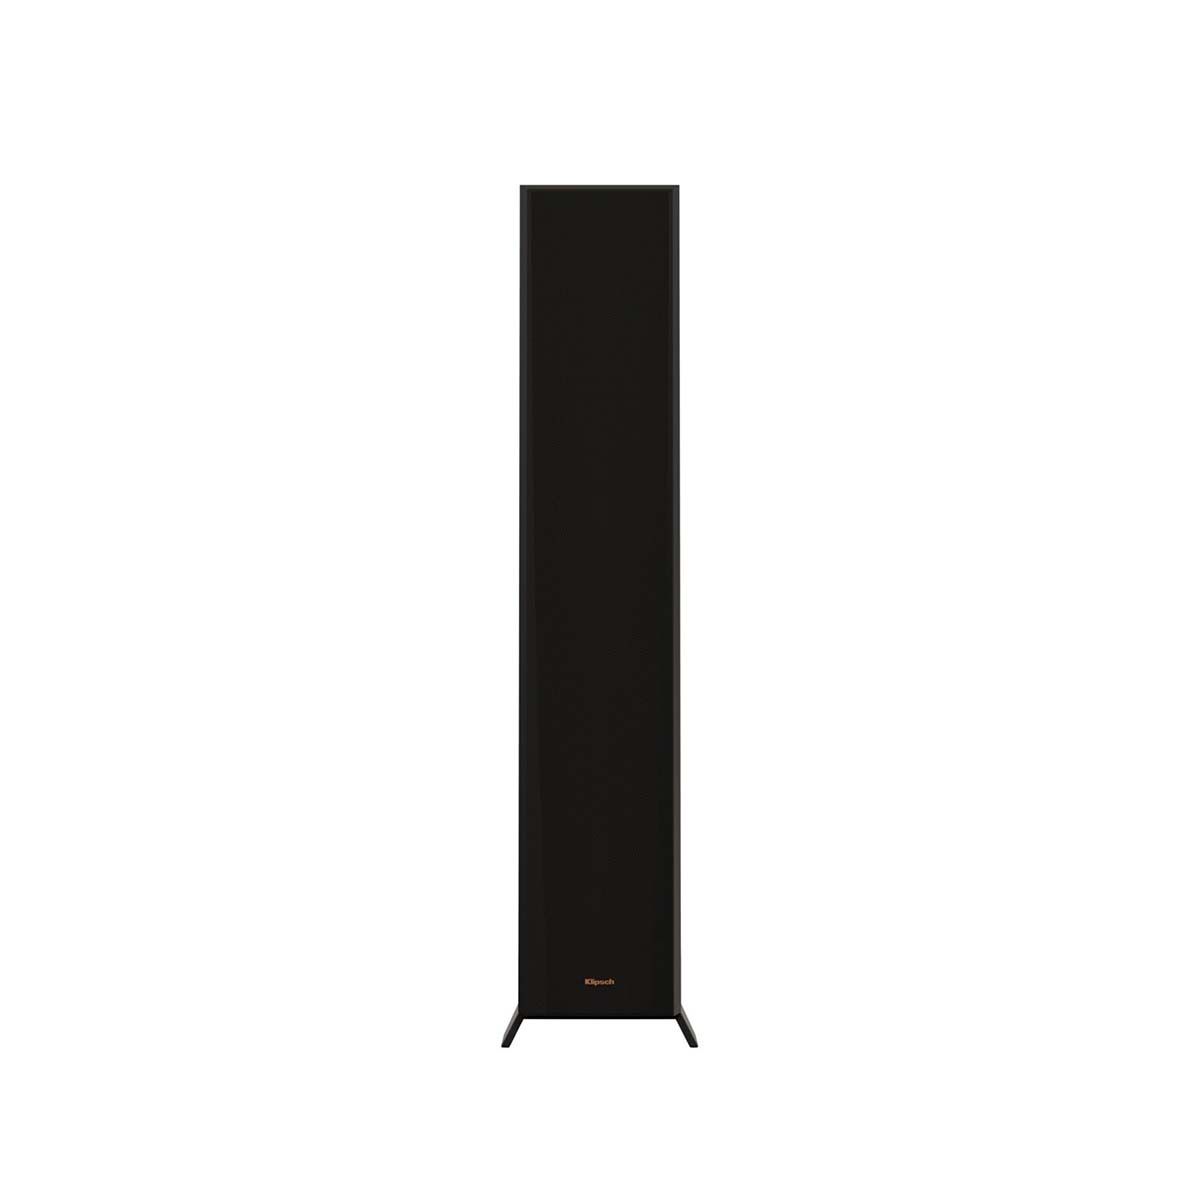 Klipsch RP-5000F II Floorstanding Speaker - Ebony - front view with grill